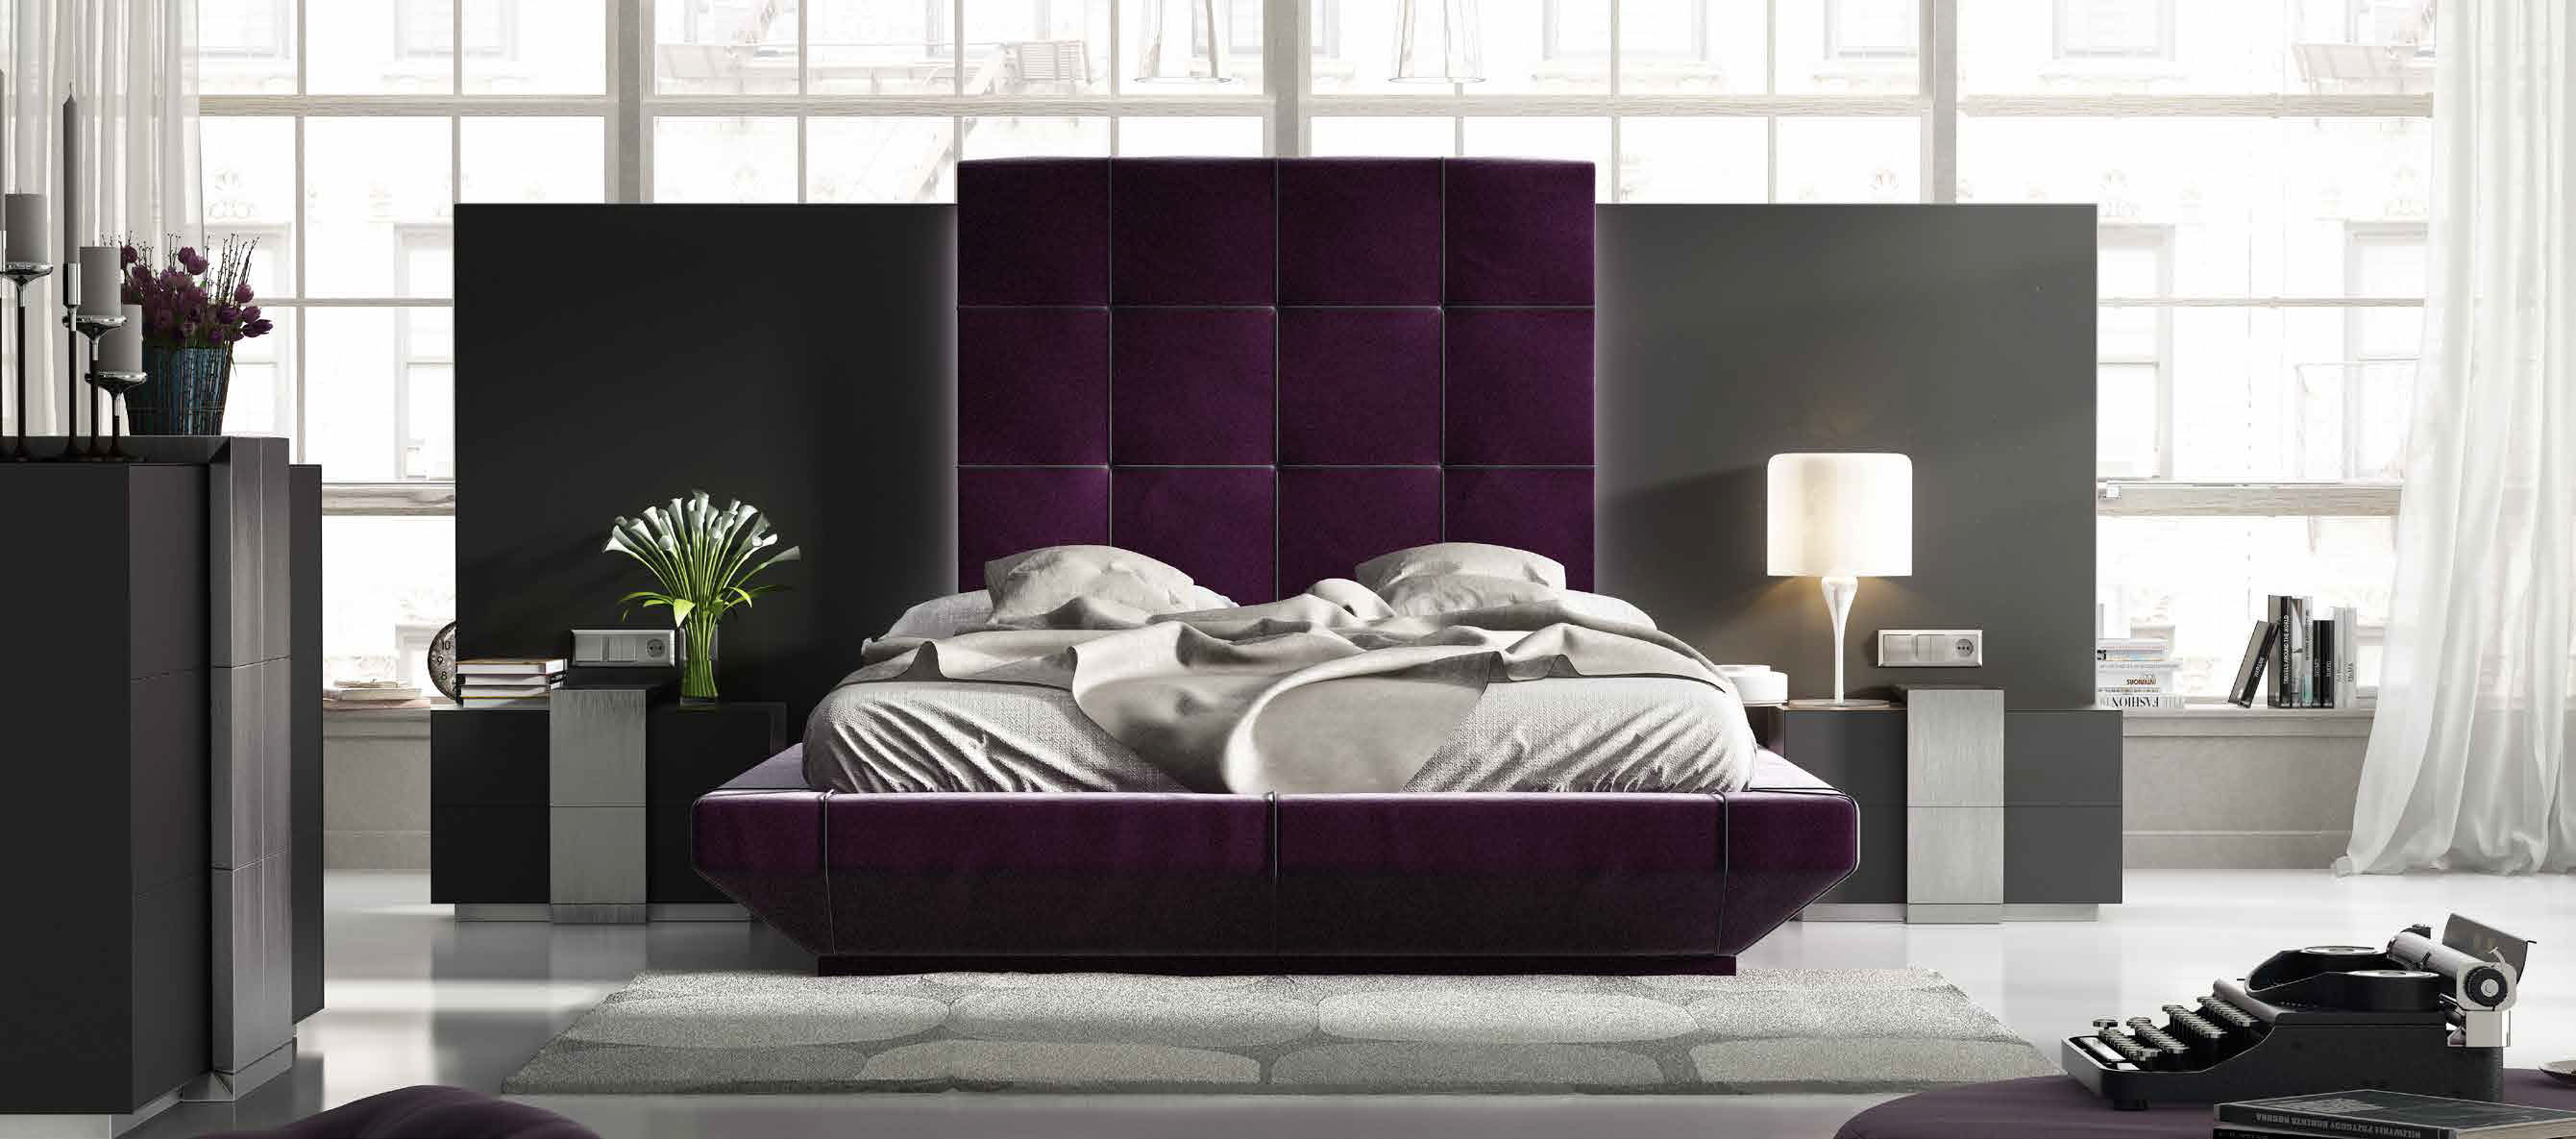 Brands Franco Furniture Bedrooms vol2, Spain DOR 01